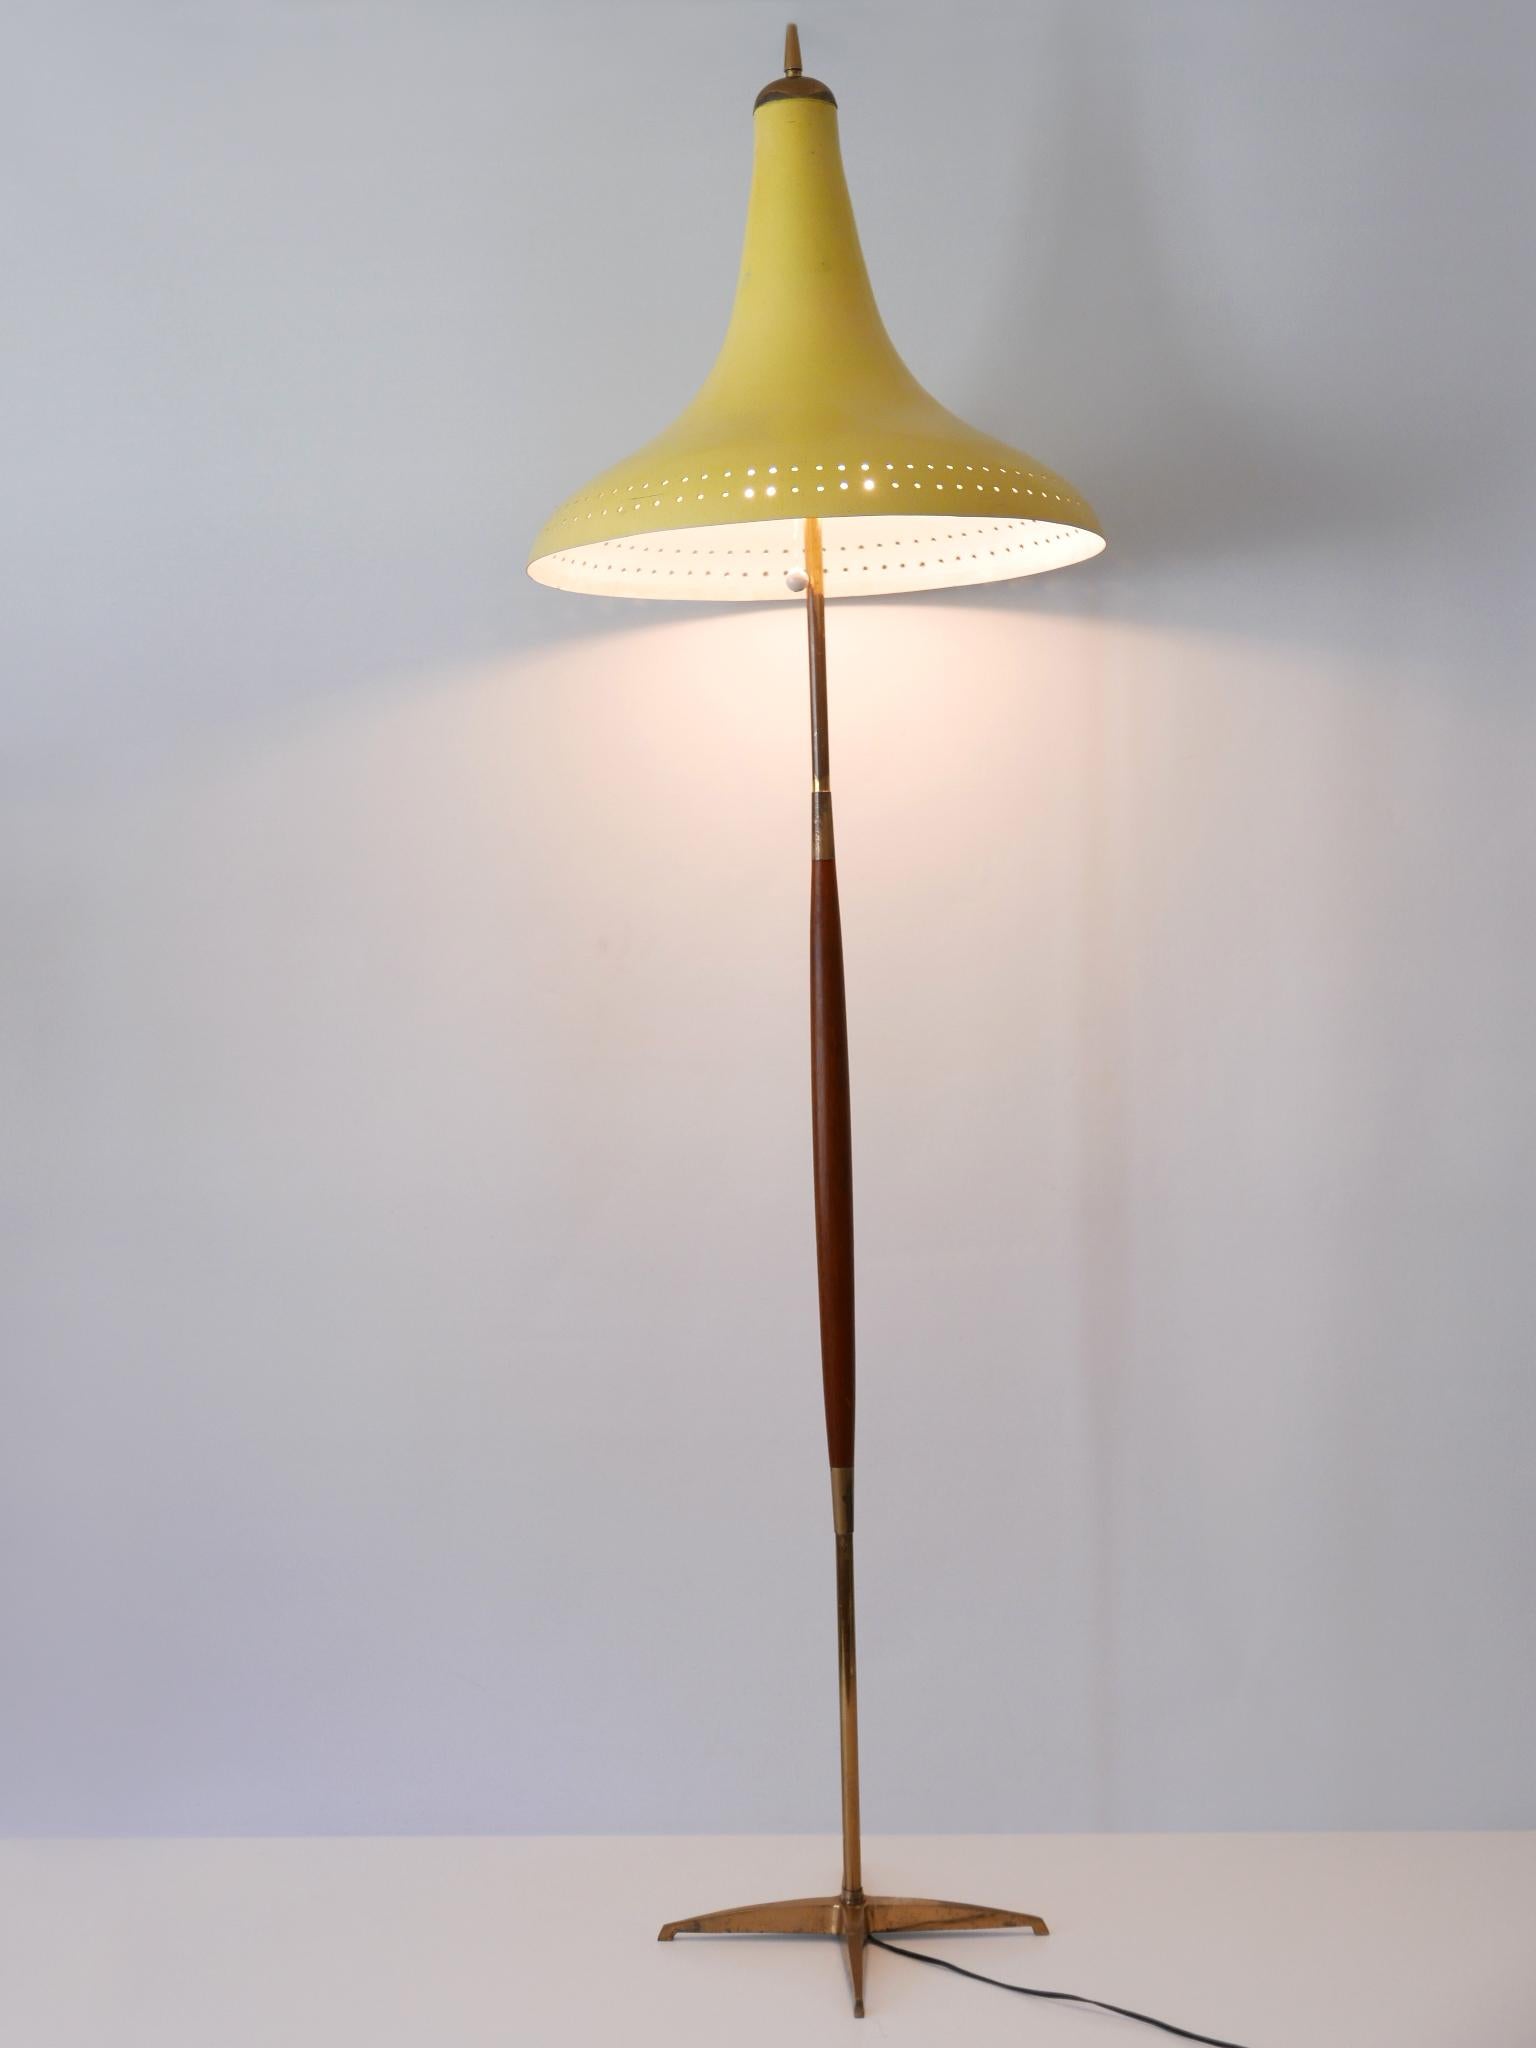 Rare and Elegant Mid Century Modern Floor Lamp or Standing Light Austria 1960s For Sale 1